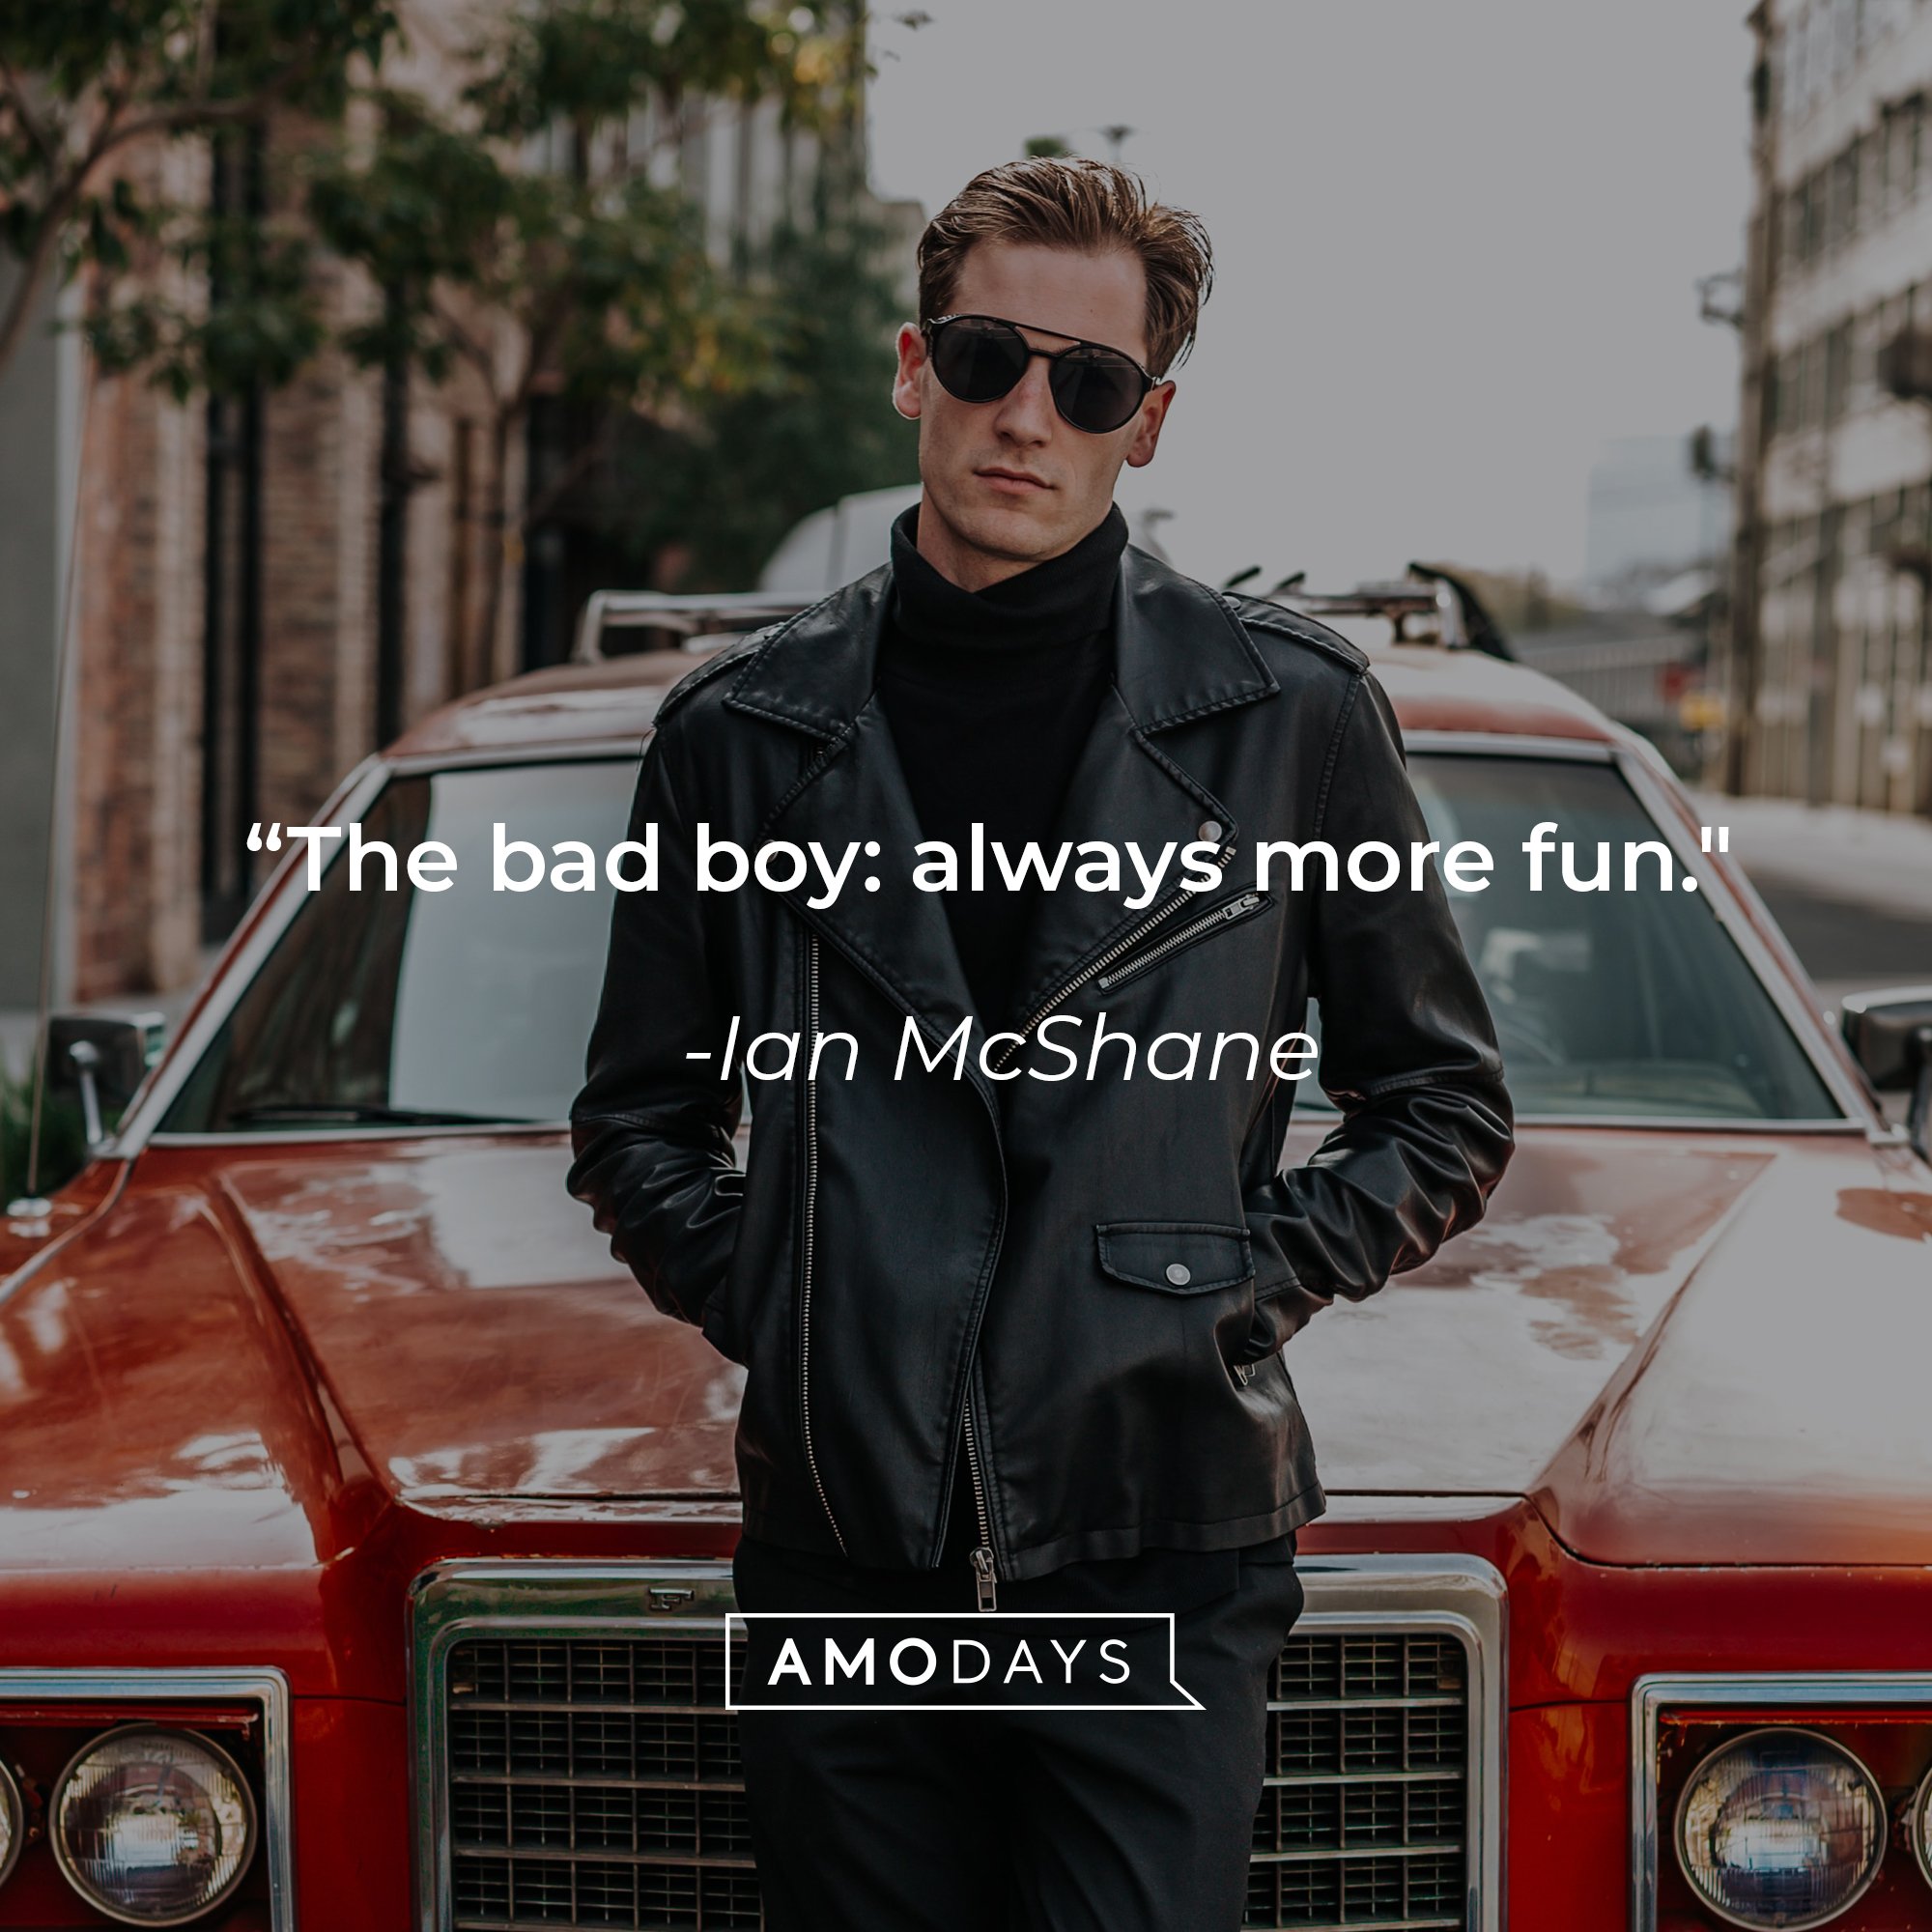 Ian McShane's quote: "The bad boy: always more fun." | Image: AmoDays